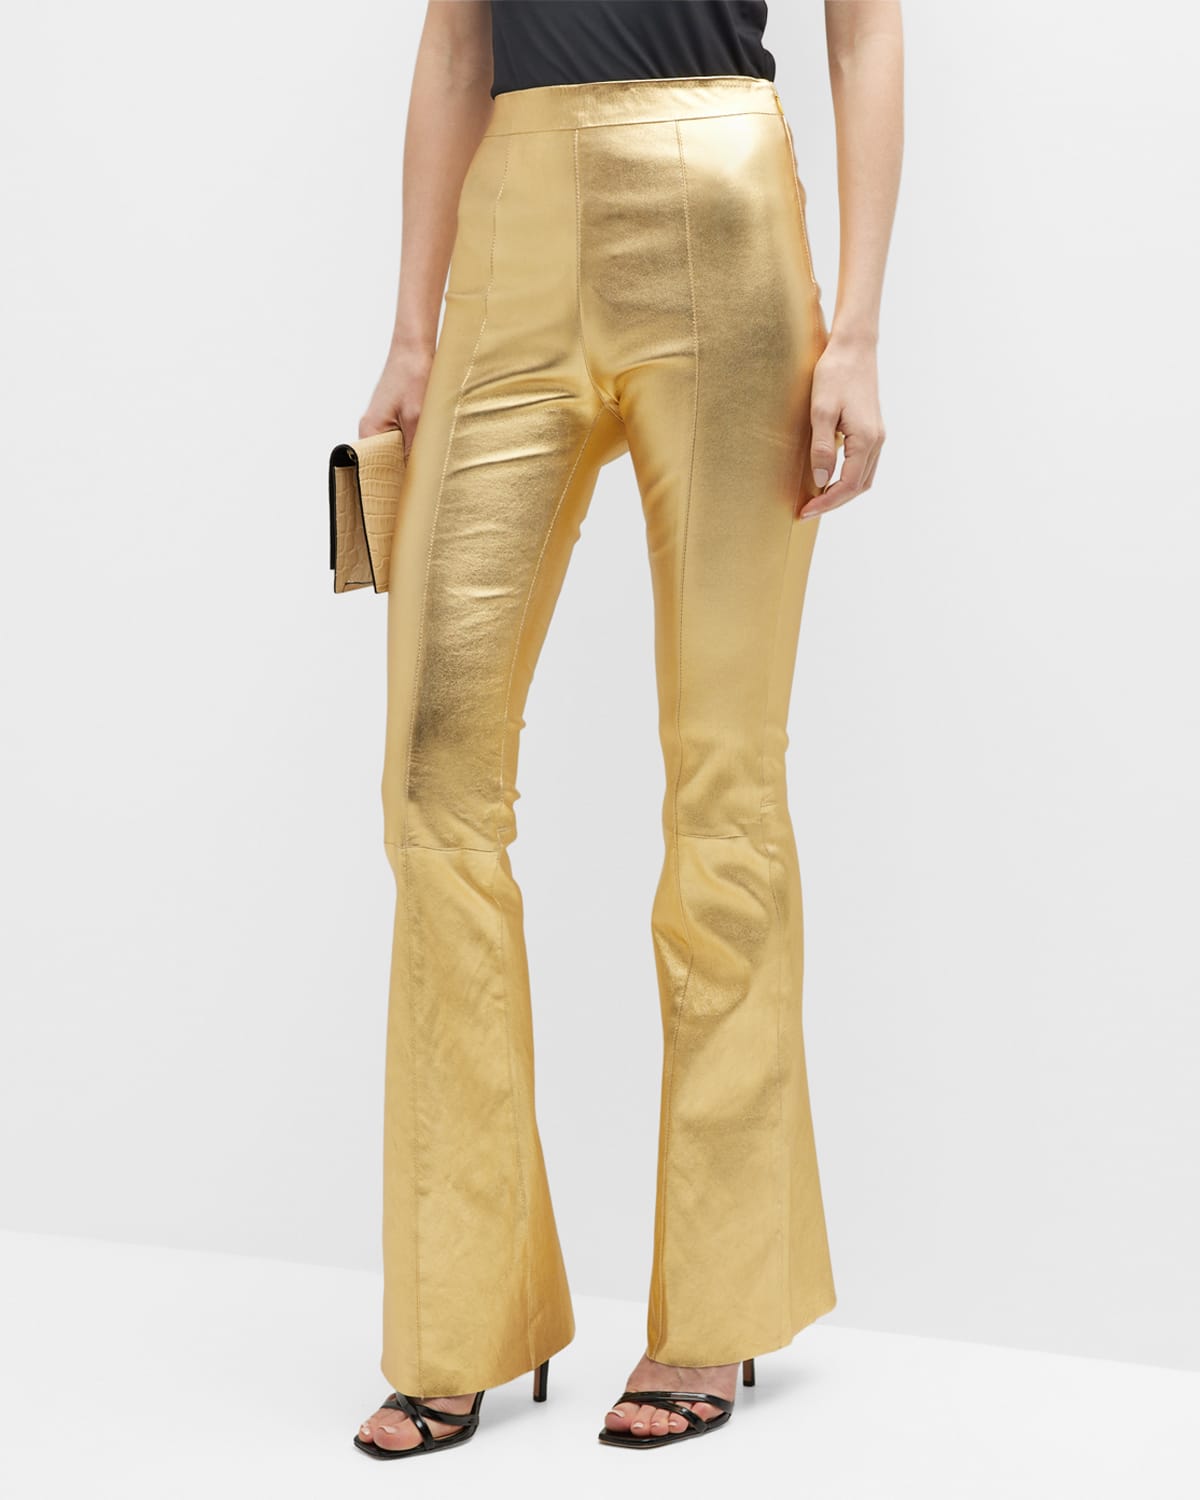 Metallic Golden Leather Flared-Leg Pants